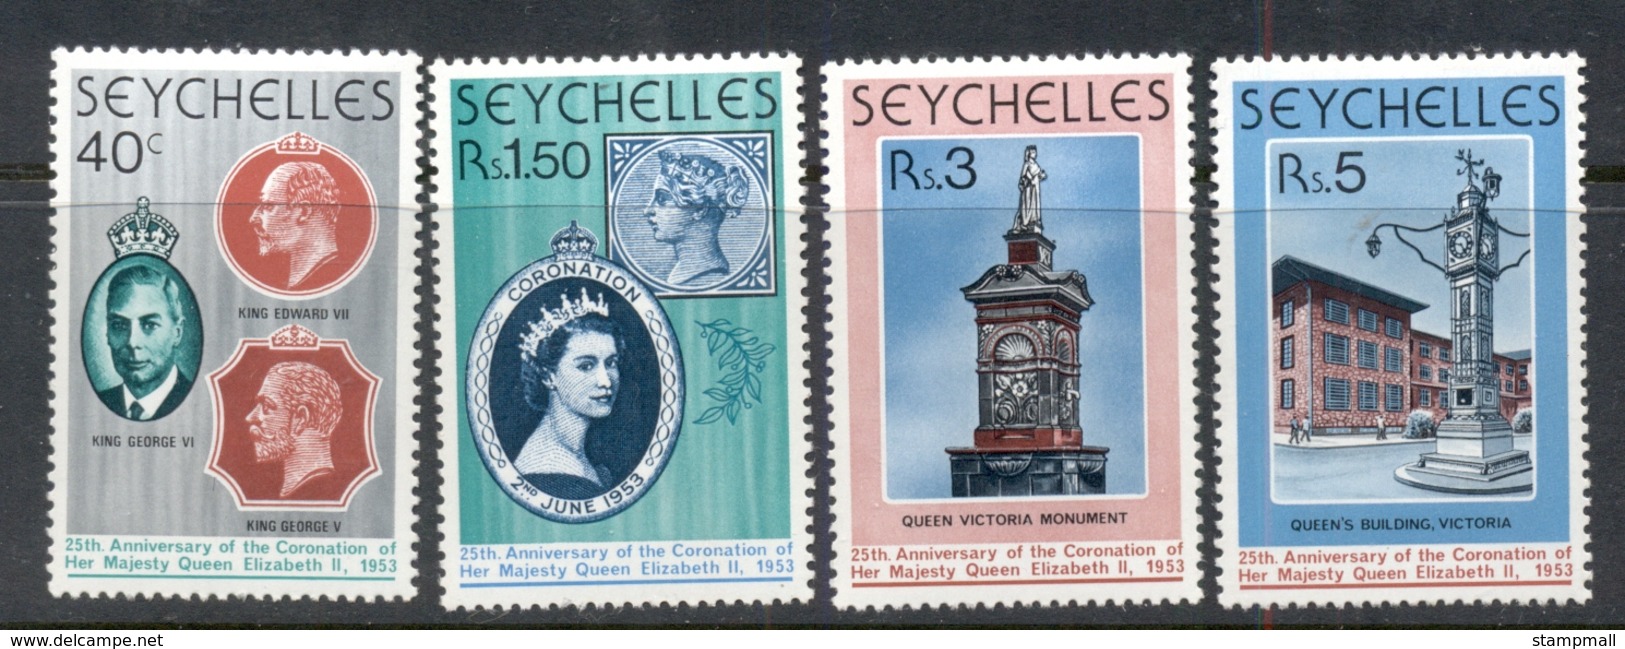 Seychelles 1978 QEII Coronation 25th Anniv. MUH - Seychelles (1976-...)